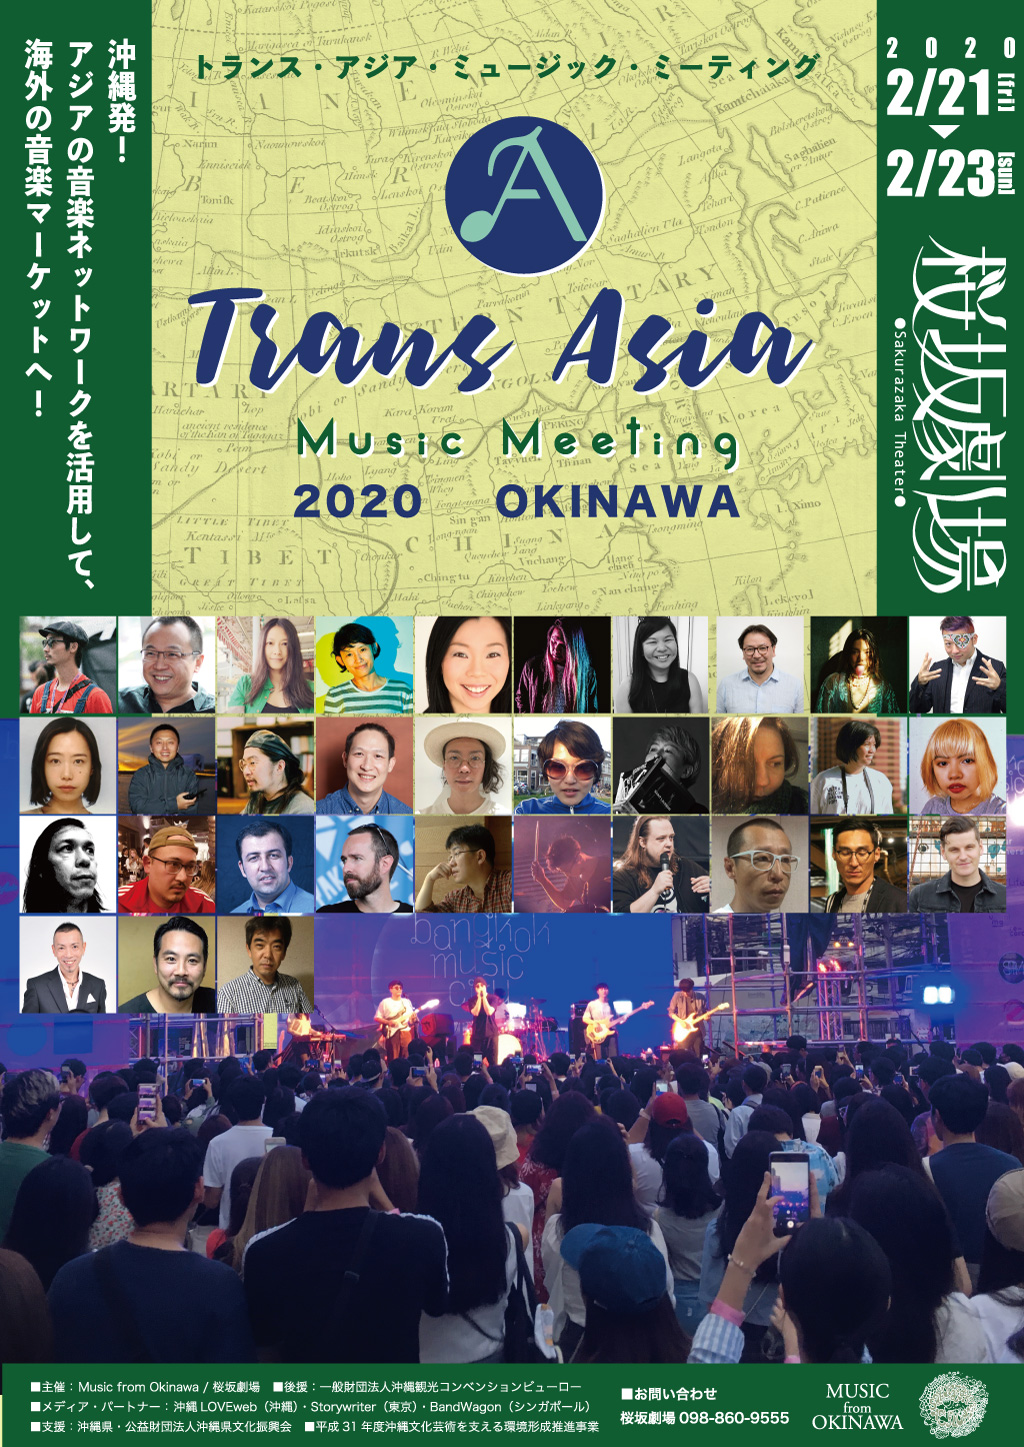 「Trans Asia Music Meeting 2020」Schedule 1（EN）